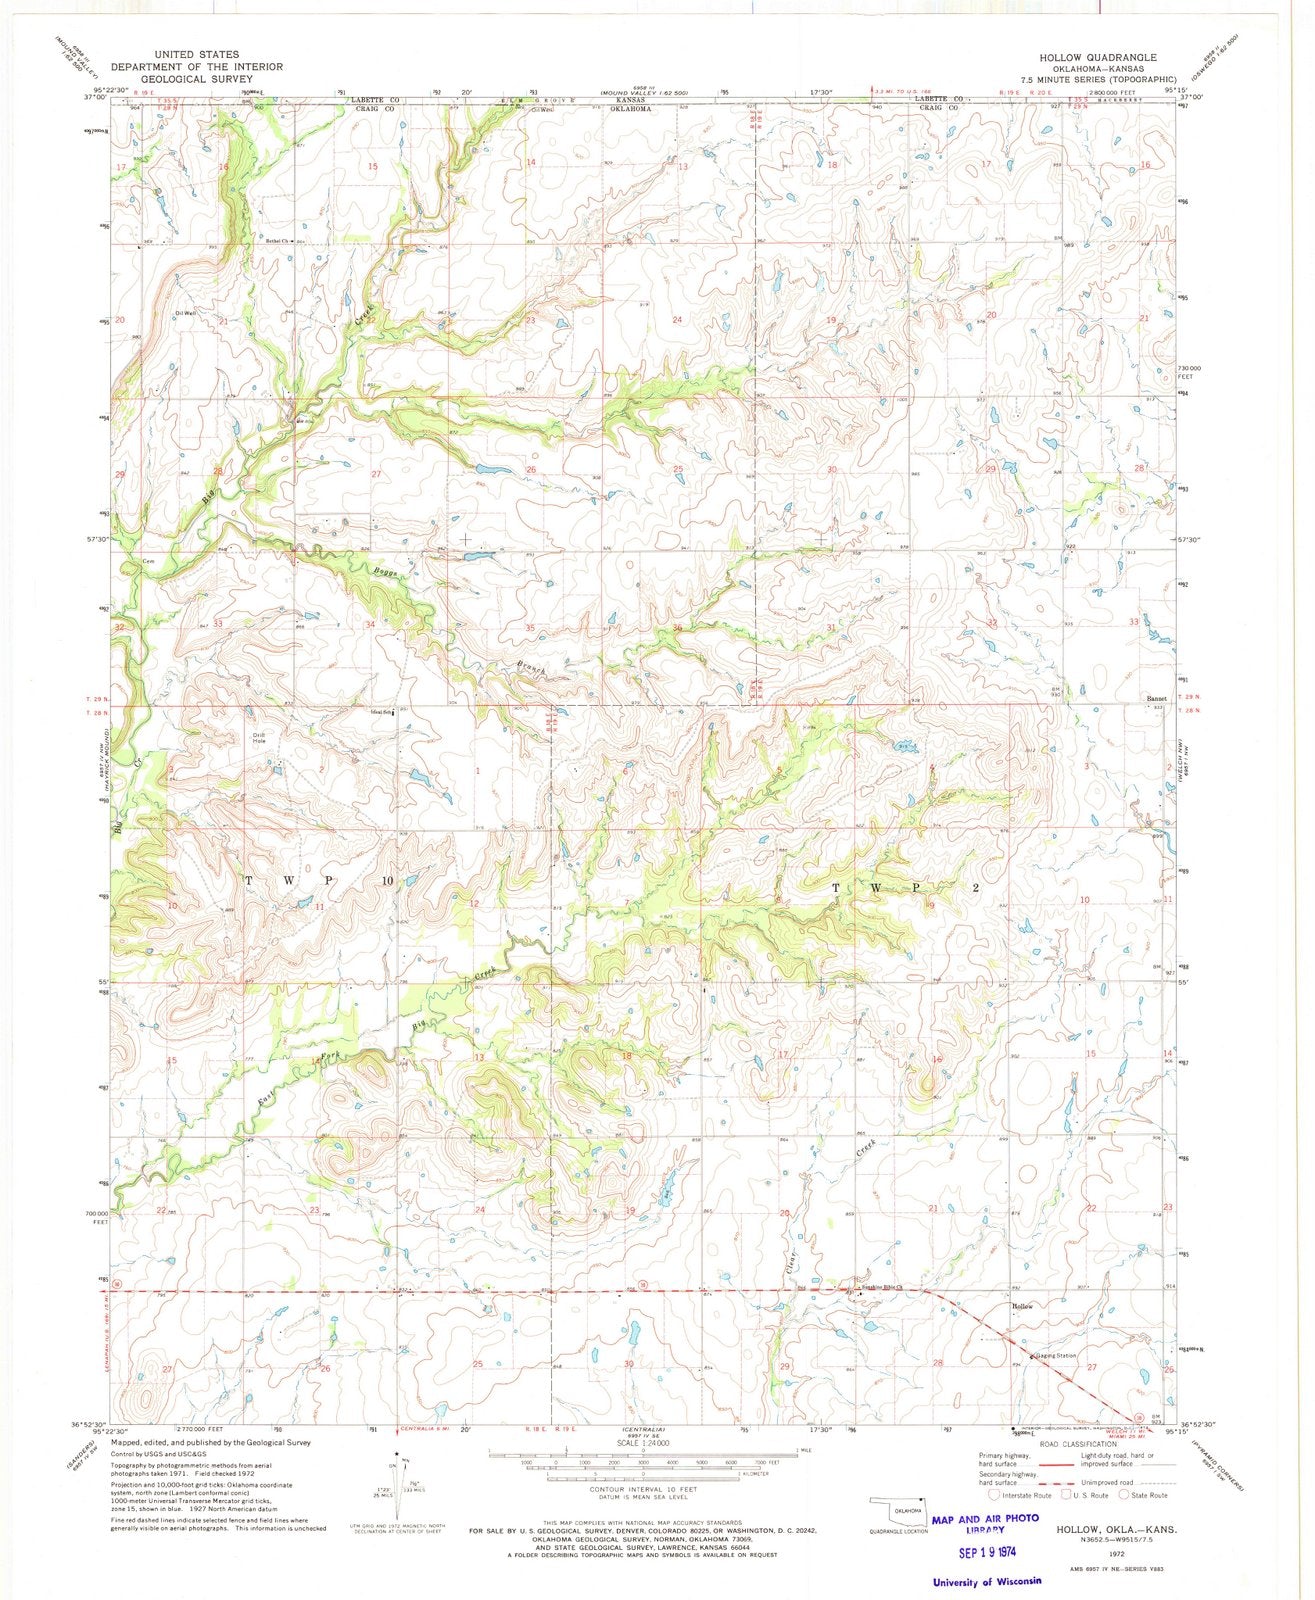 1972 Hollow, OK - Oklahoma - USGS Topographic Map